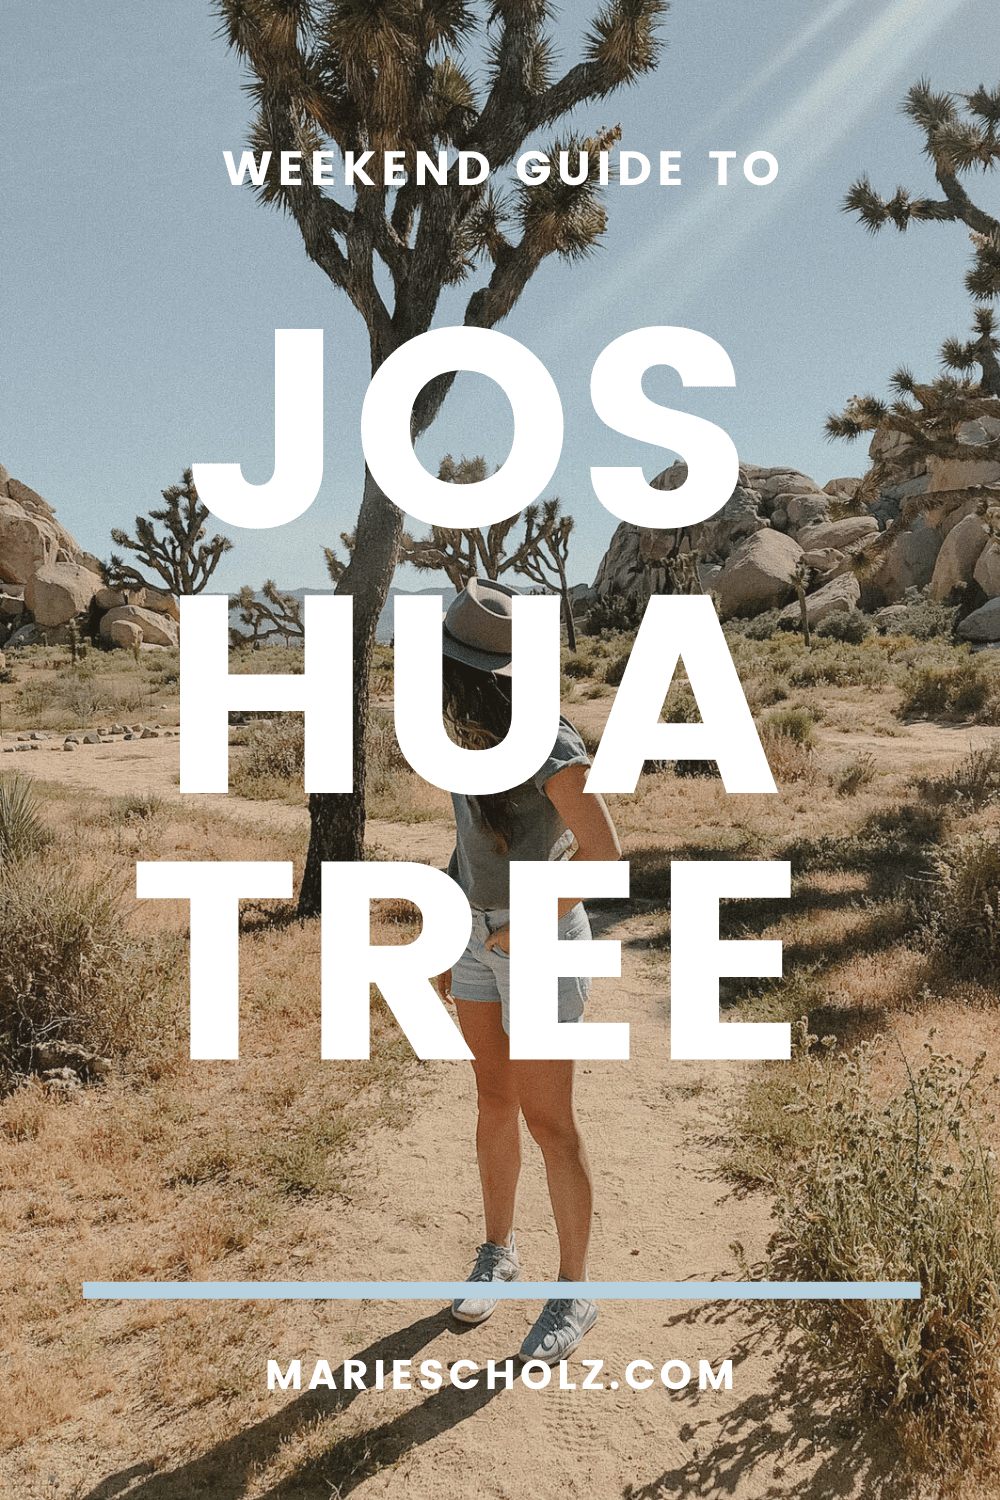 joshua tree weekend guide (1)